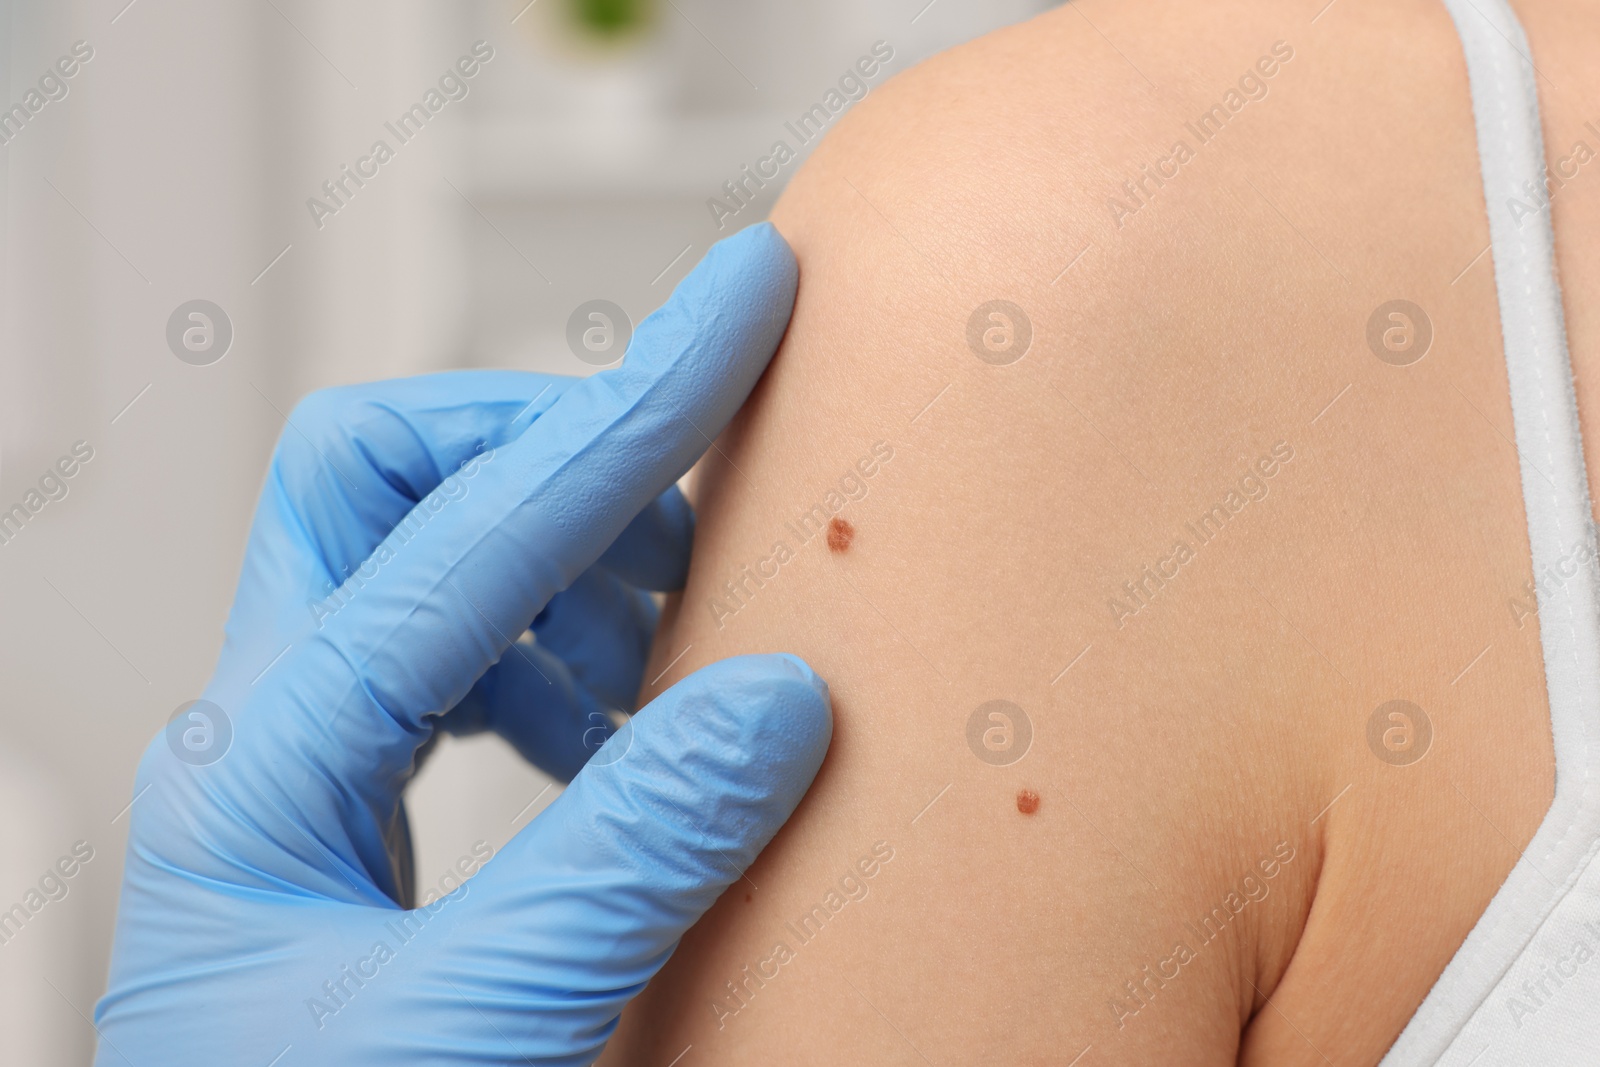 Photo of Dermatologist examining patient's birthmark indoors, closeup view